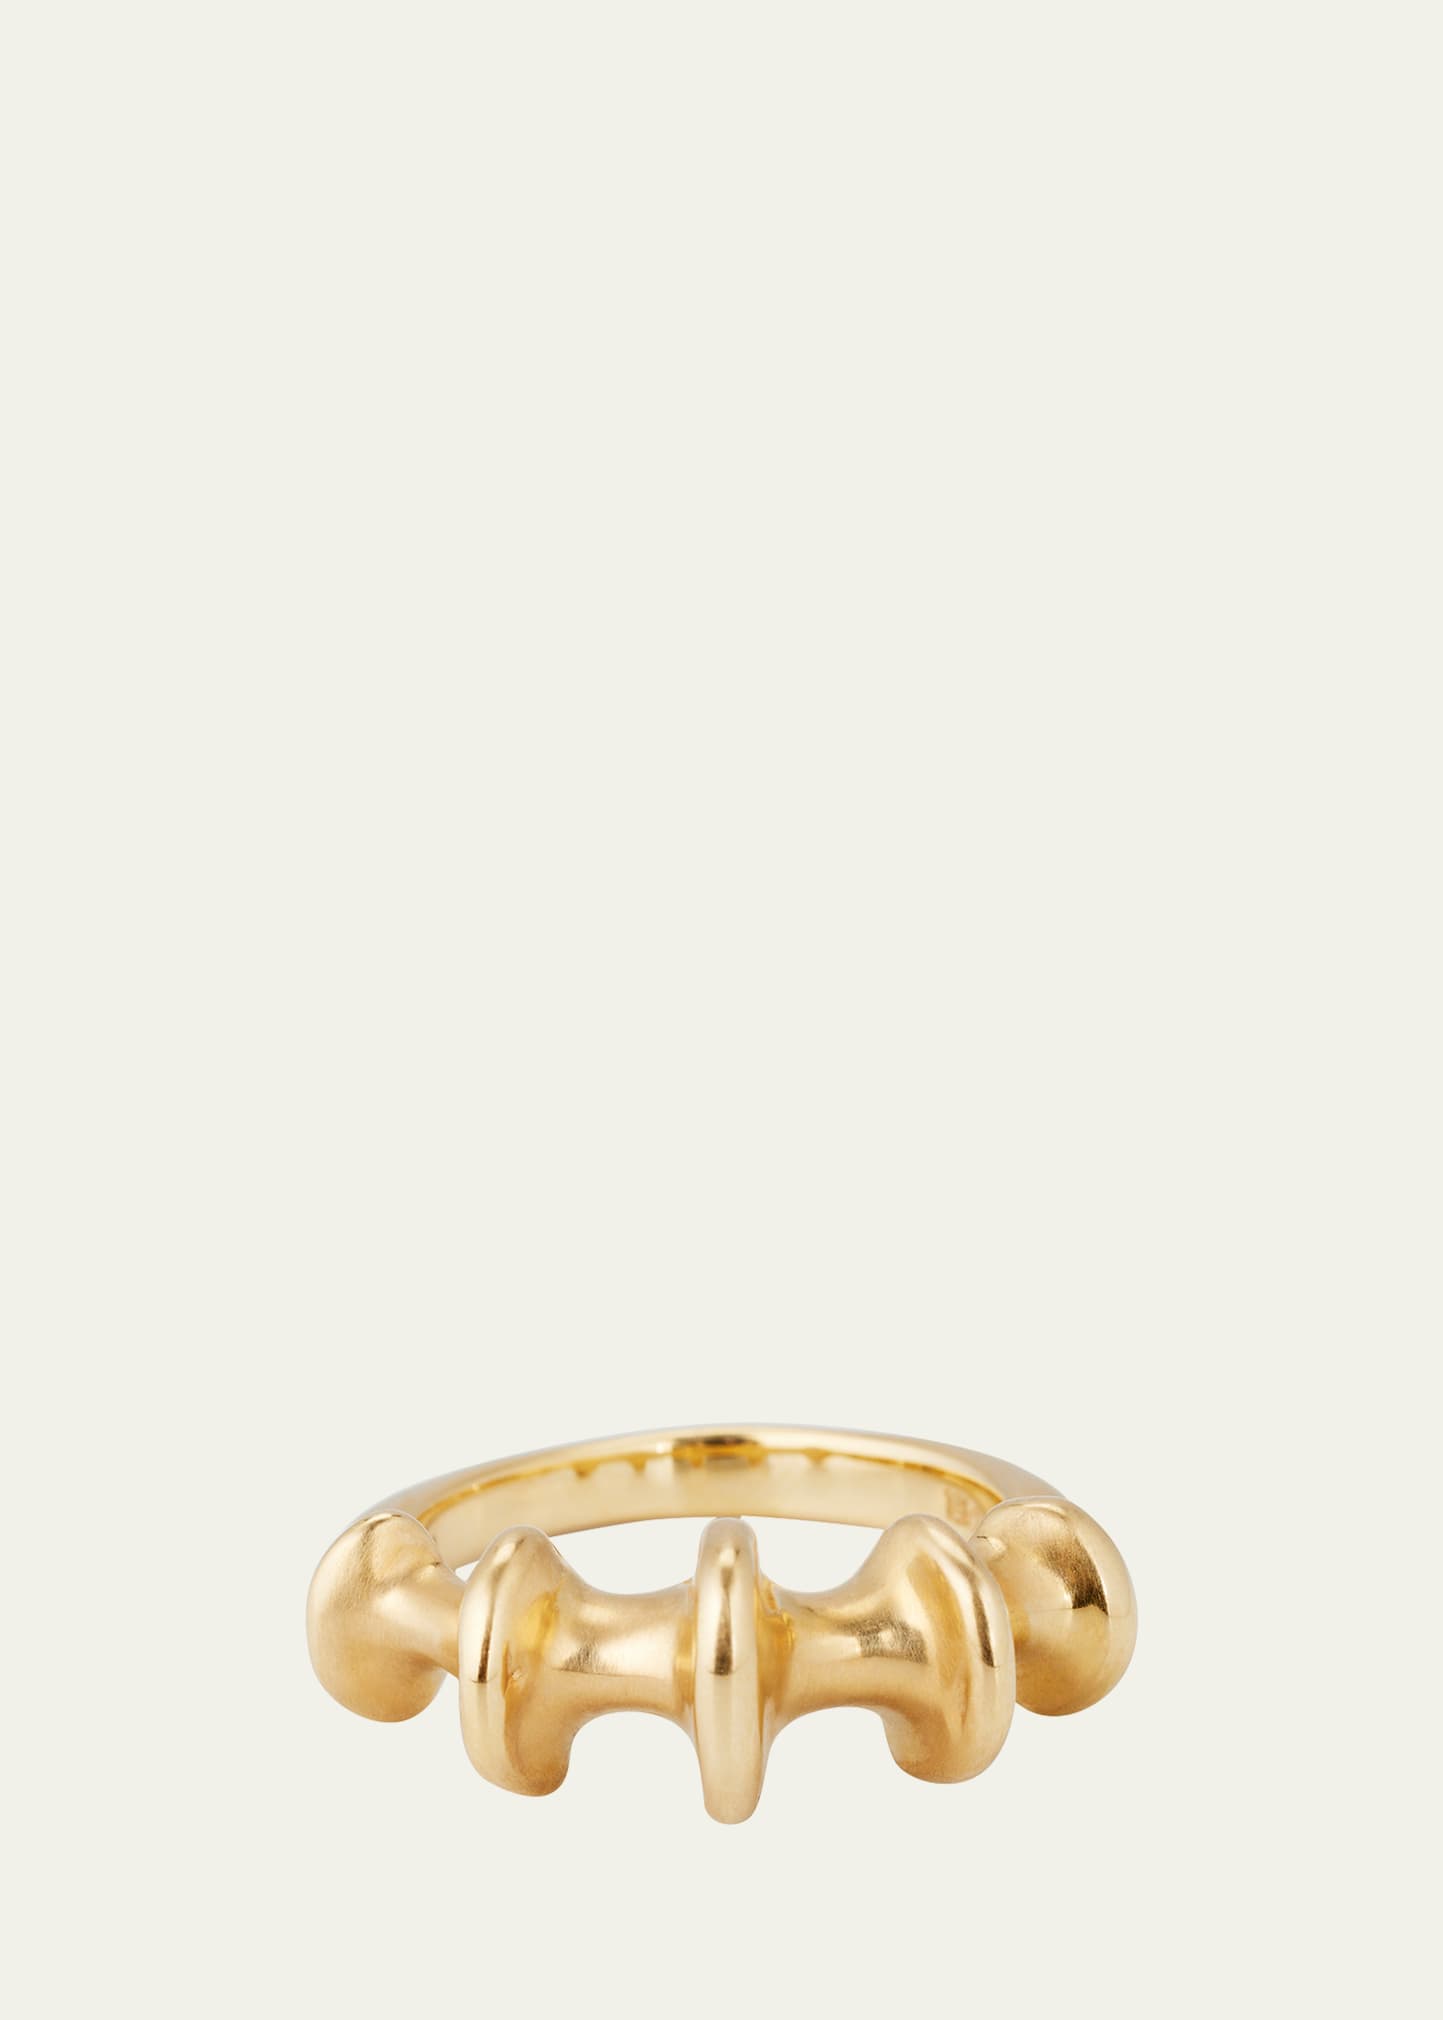 Yellow Gold Chrona Band Ring, Size 6.5